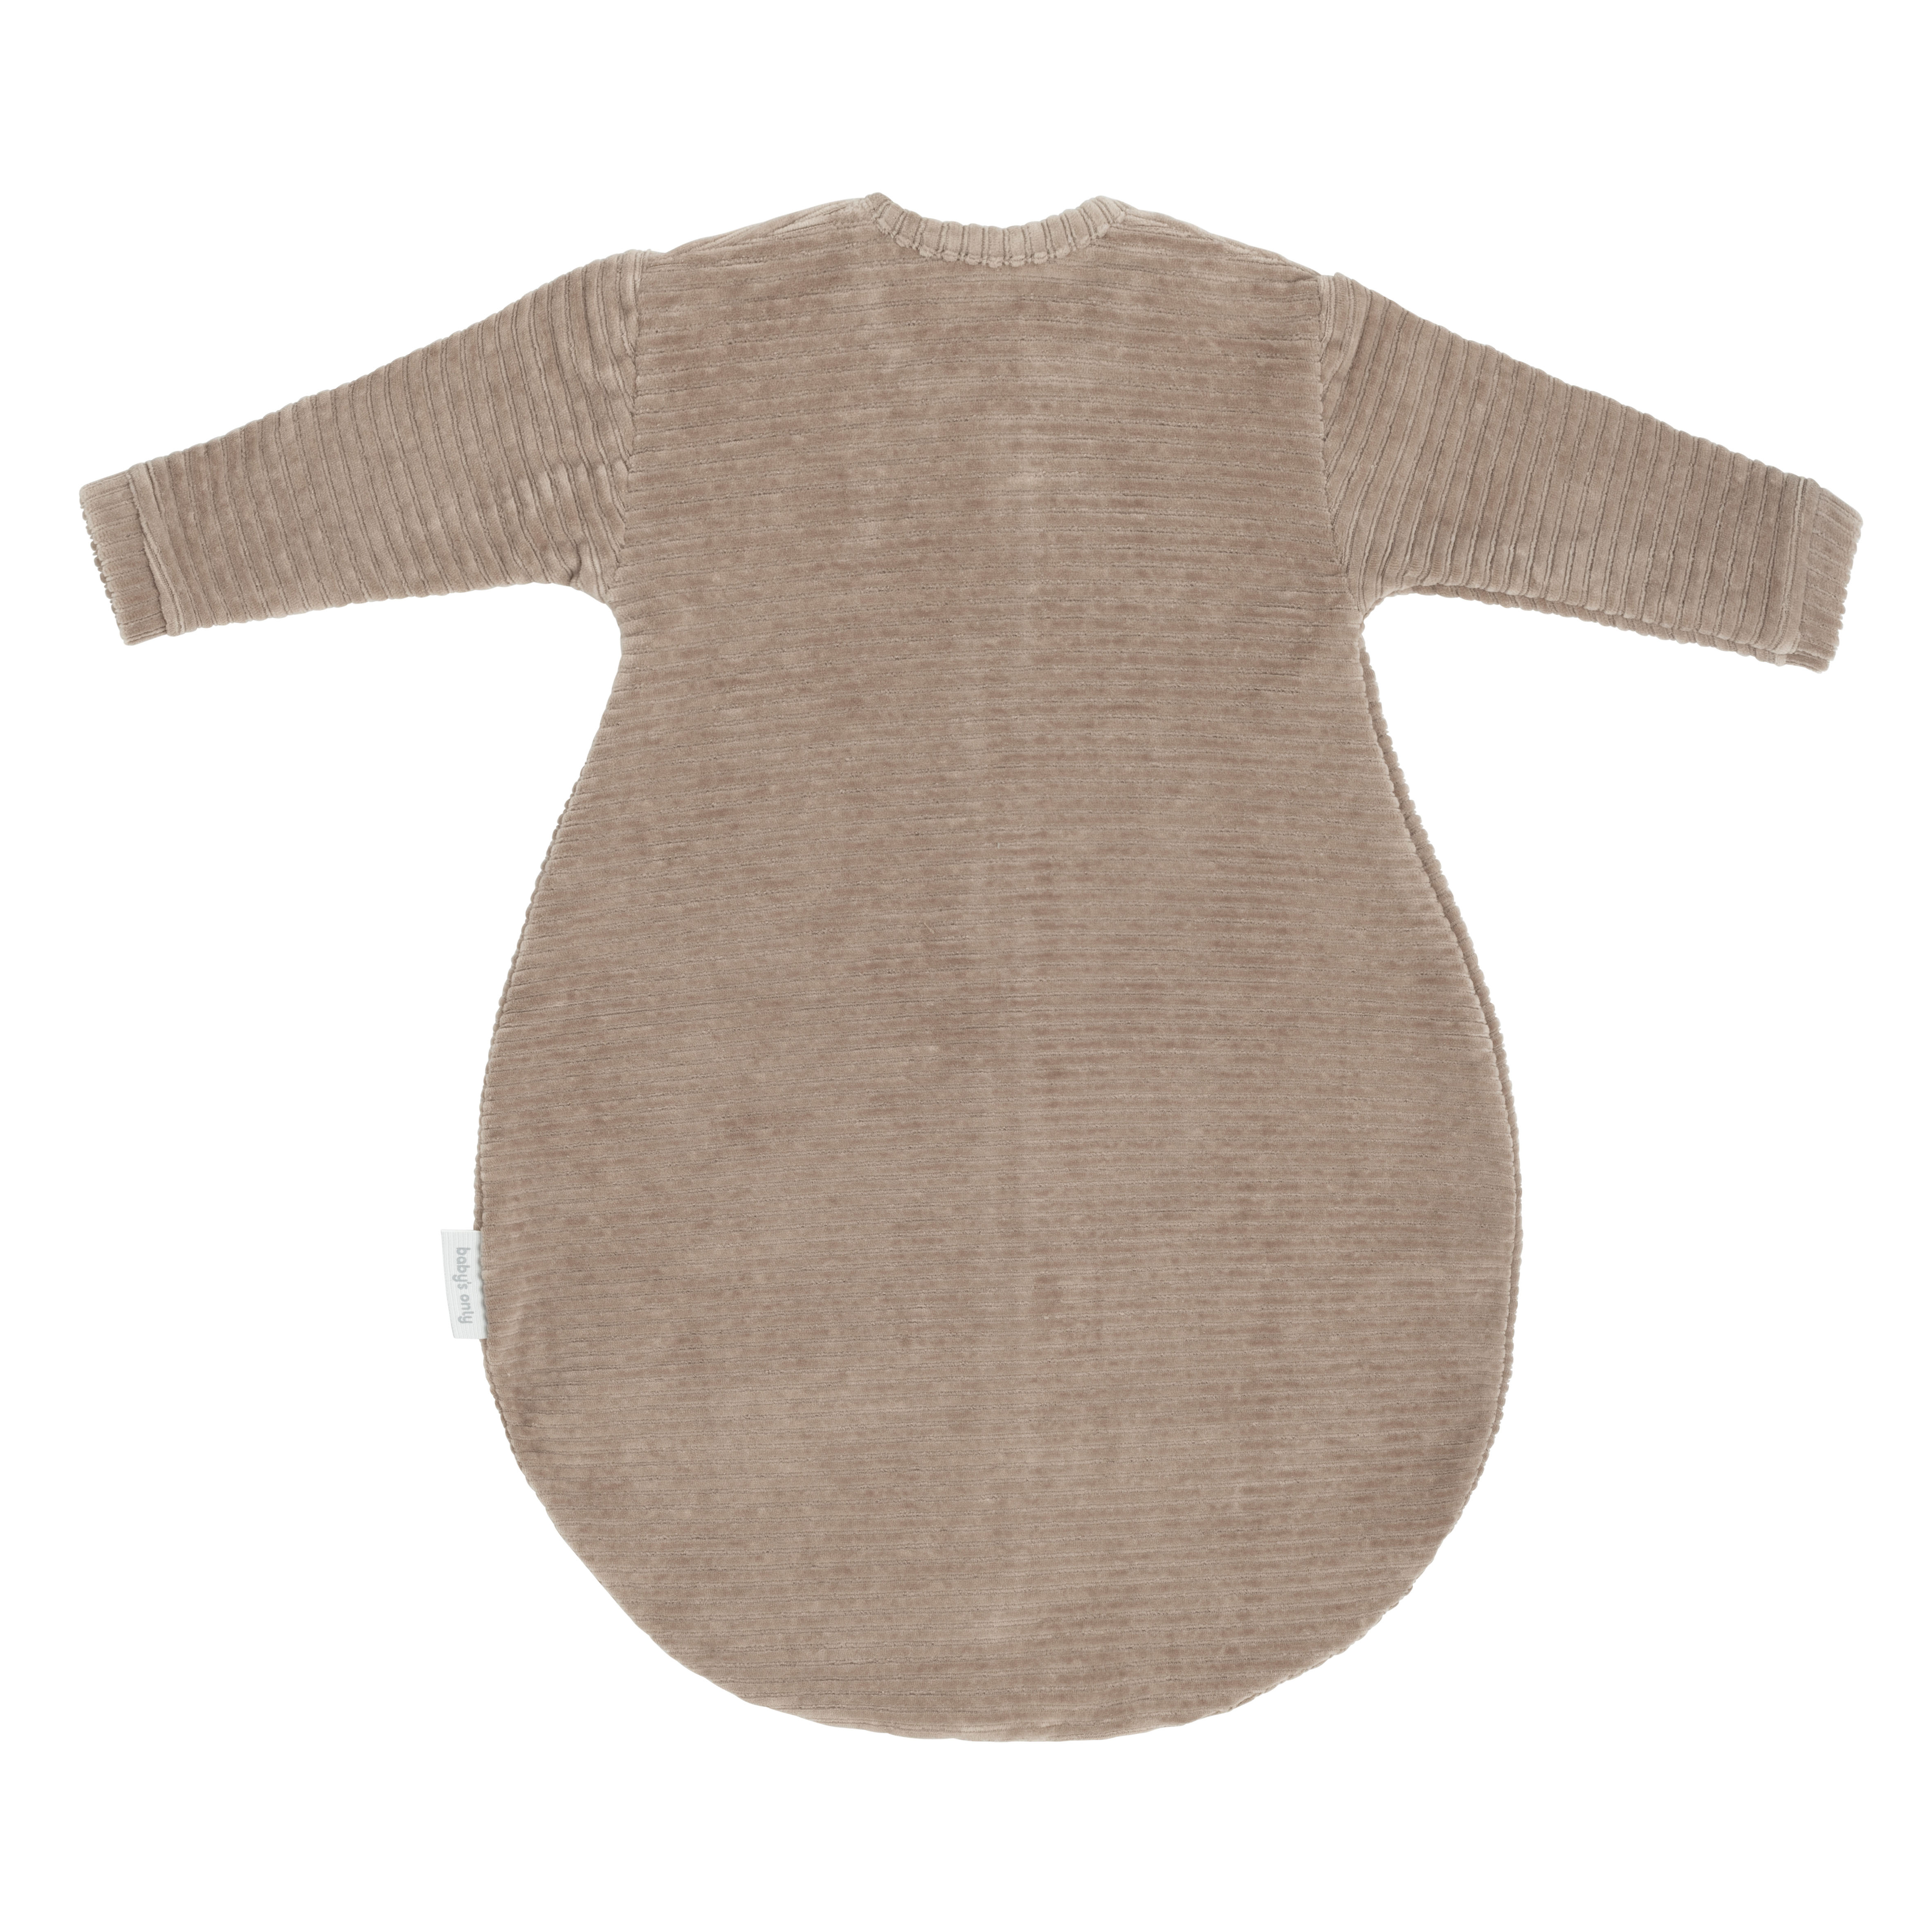 Sleeping bag long sleeves Sense clay - 60 cm